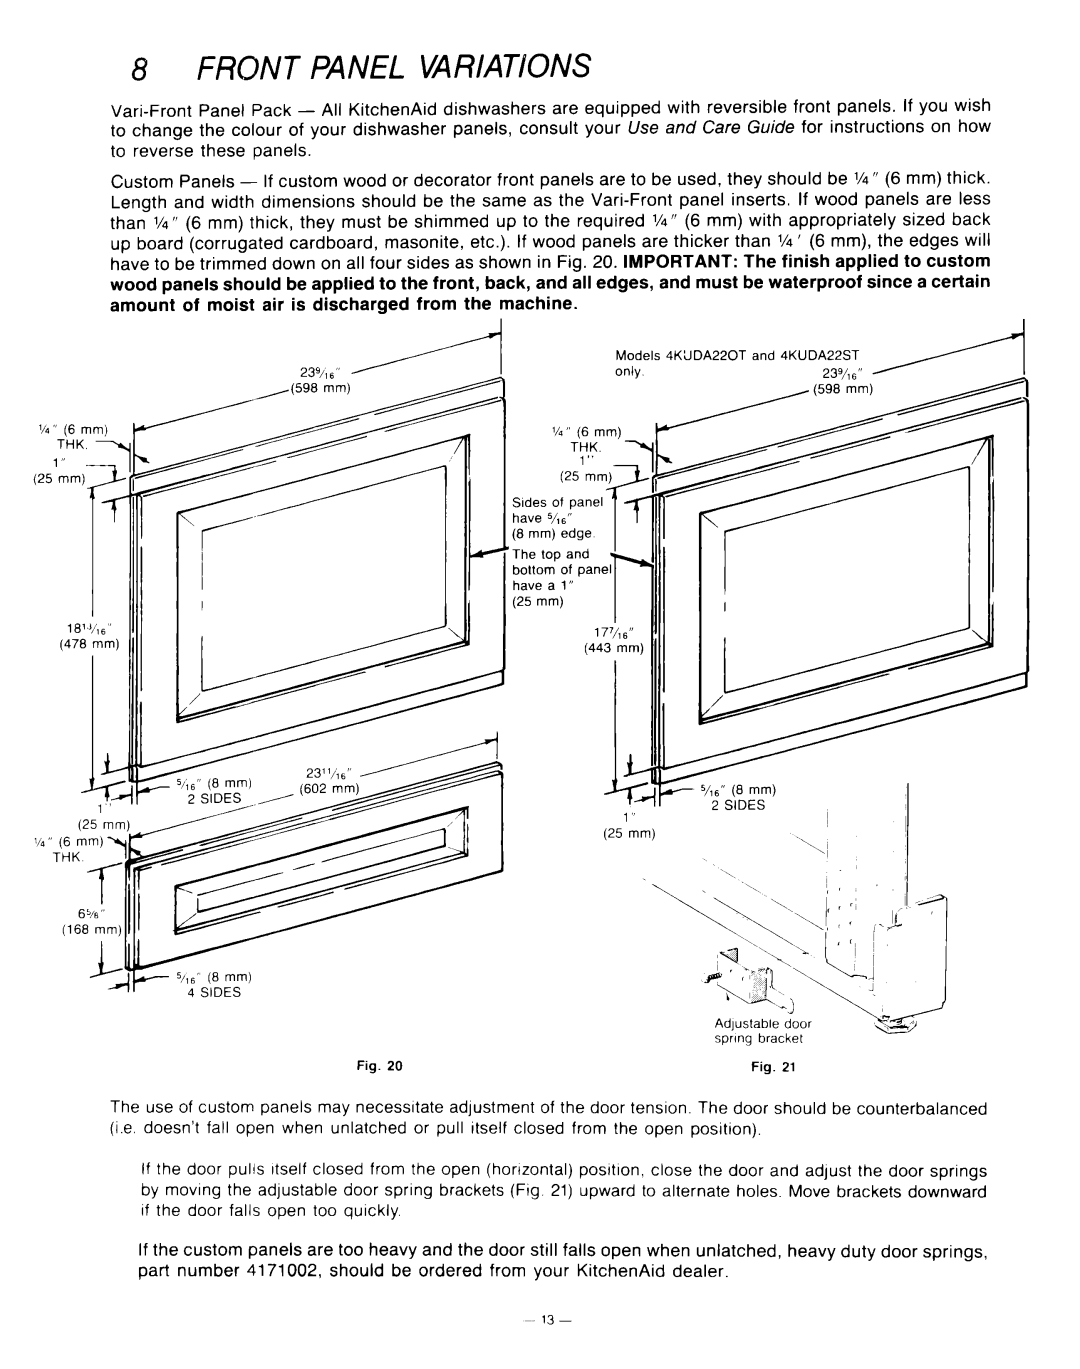 KitchenAid KUD-22 manual Front Panel Variations, ‘/4”THK.@mm7r 